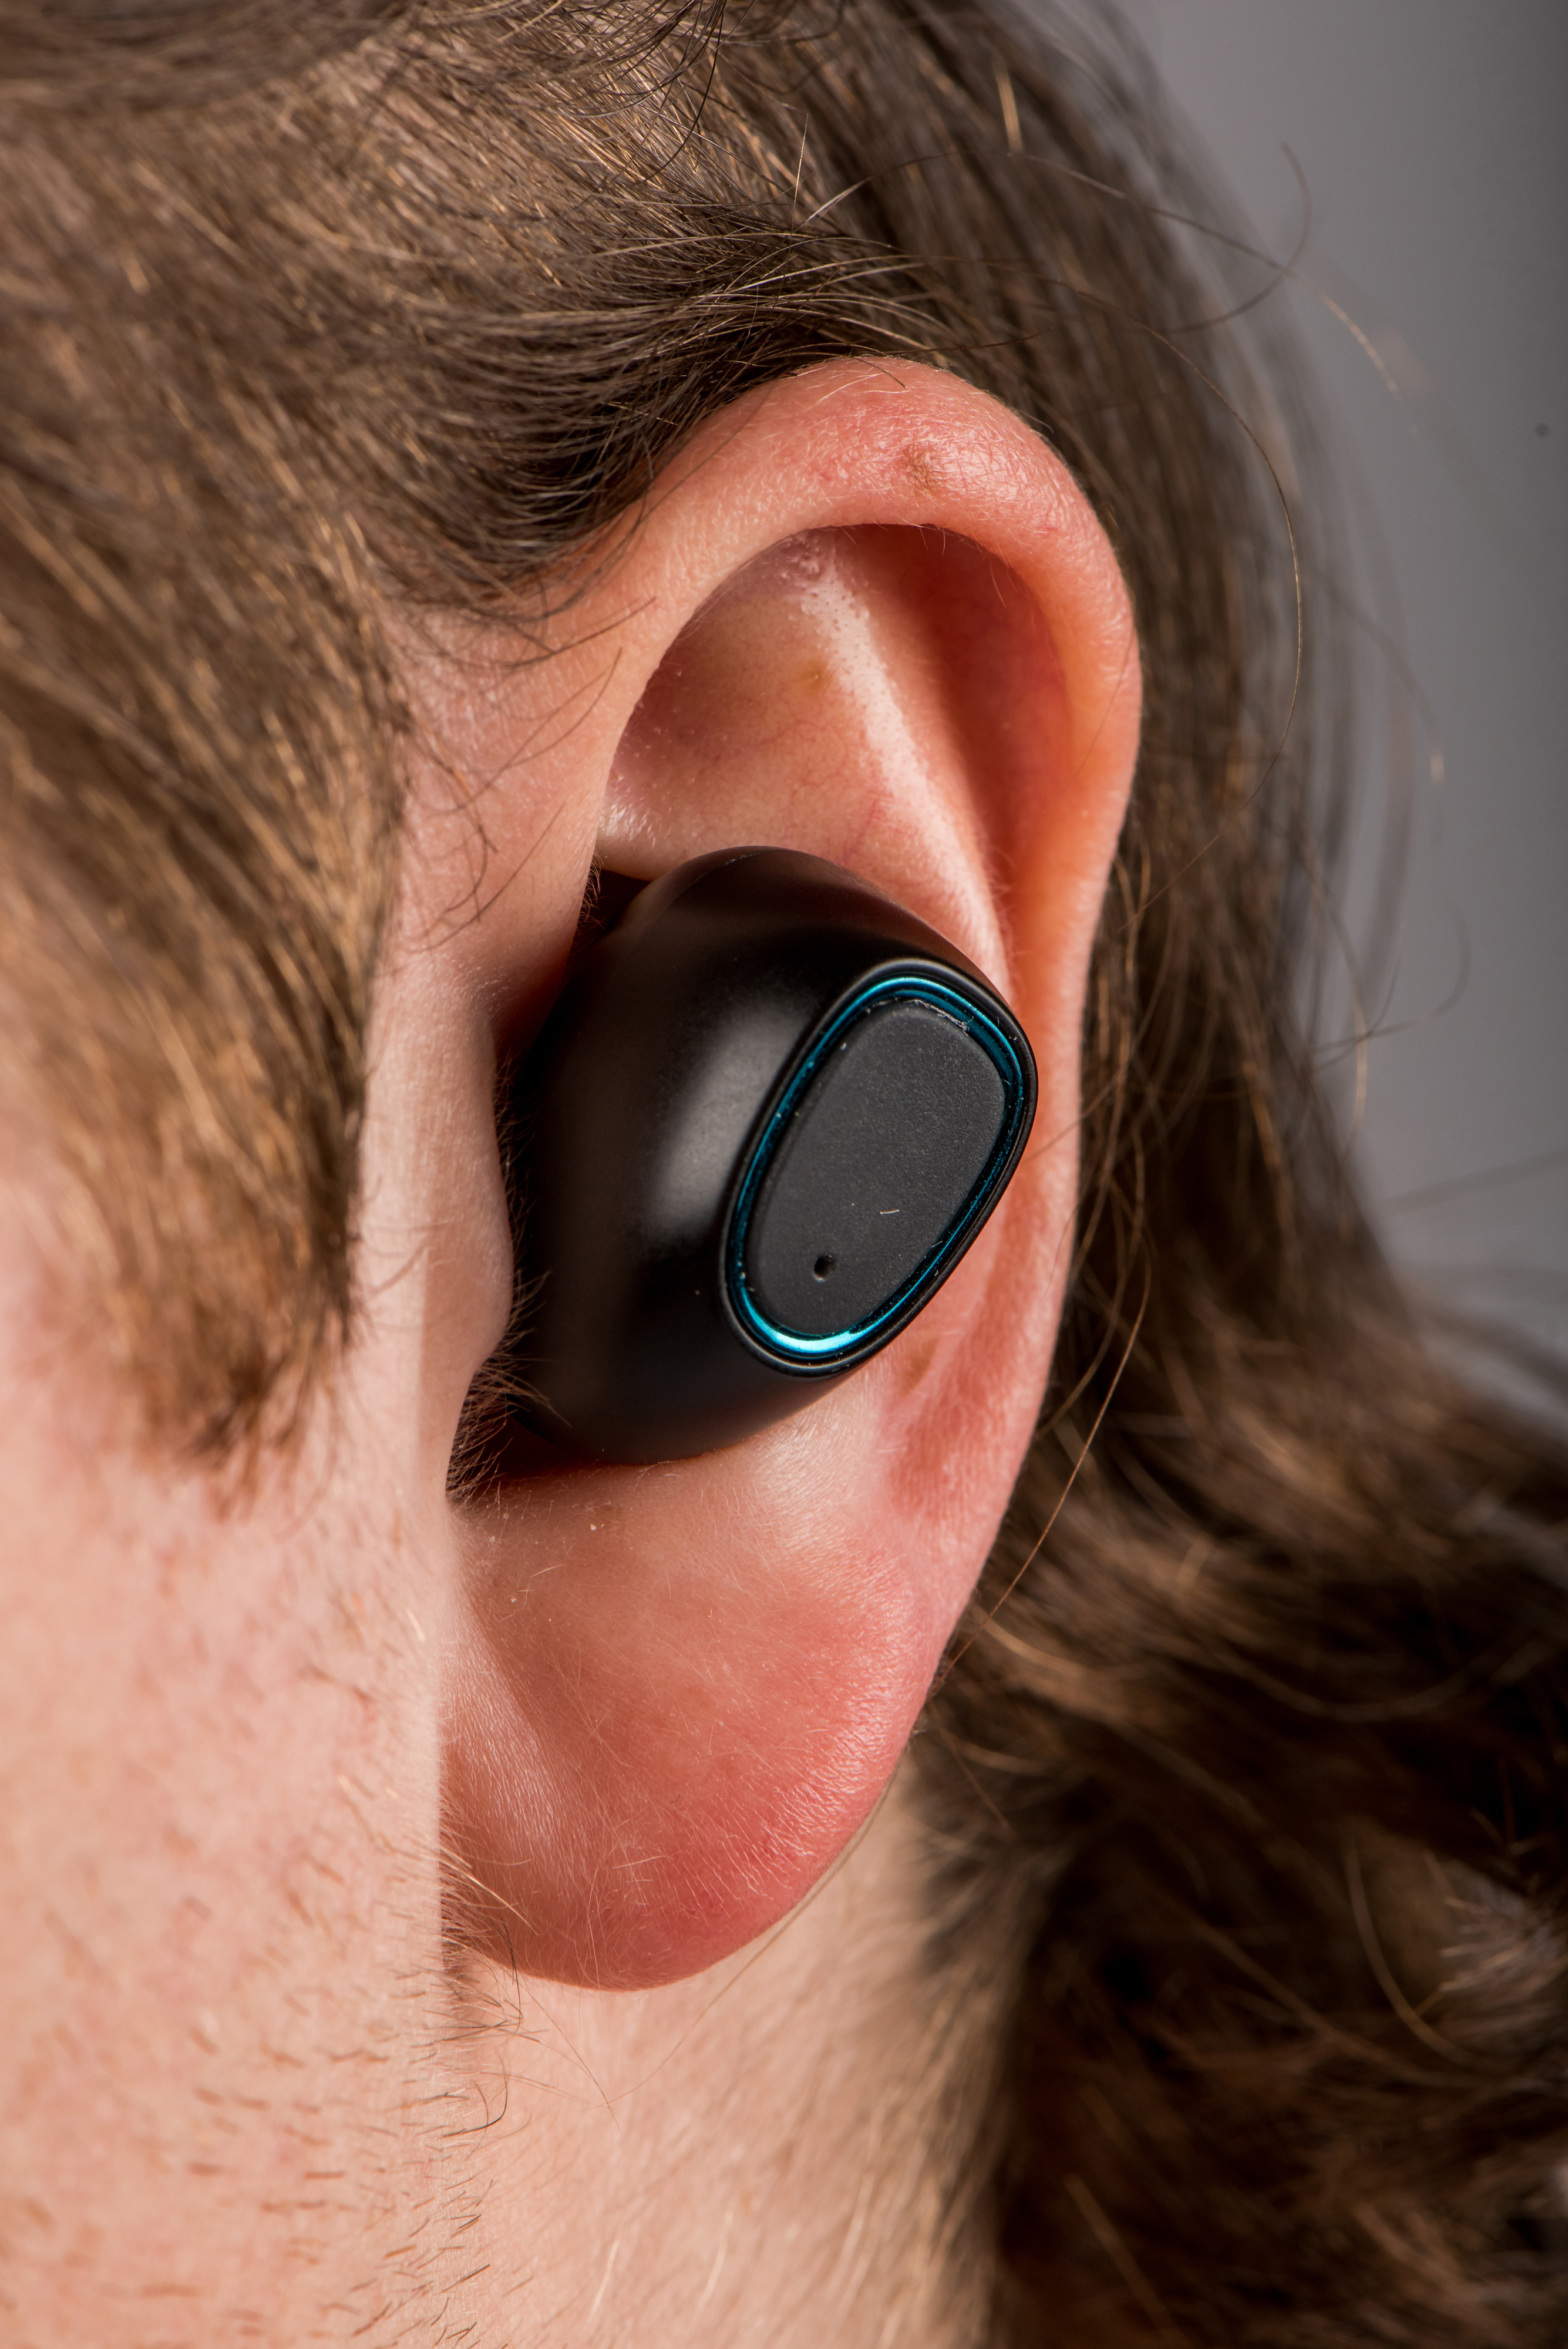 Schwarz Bluetooth Headphone In-ear EPB-410BK, LENCO Bluetooth